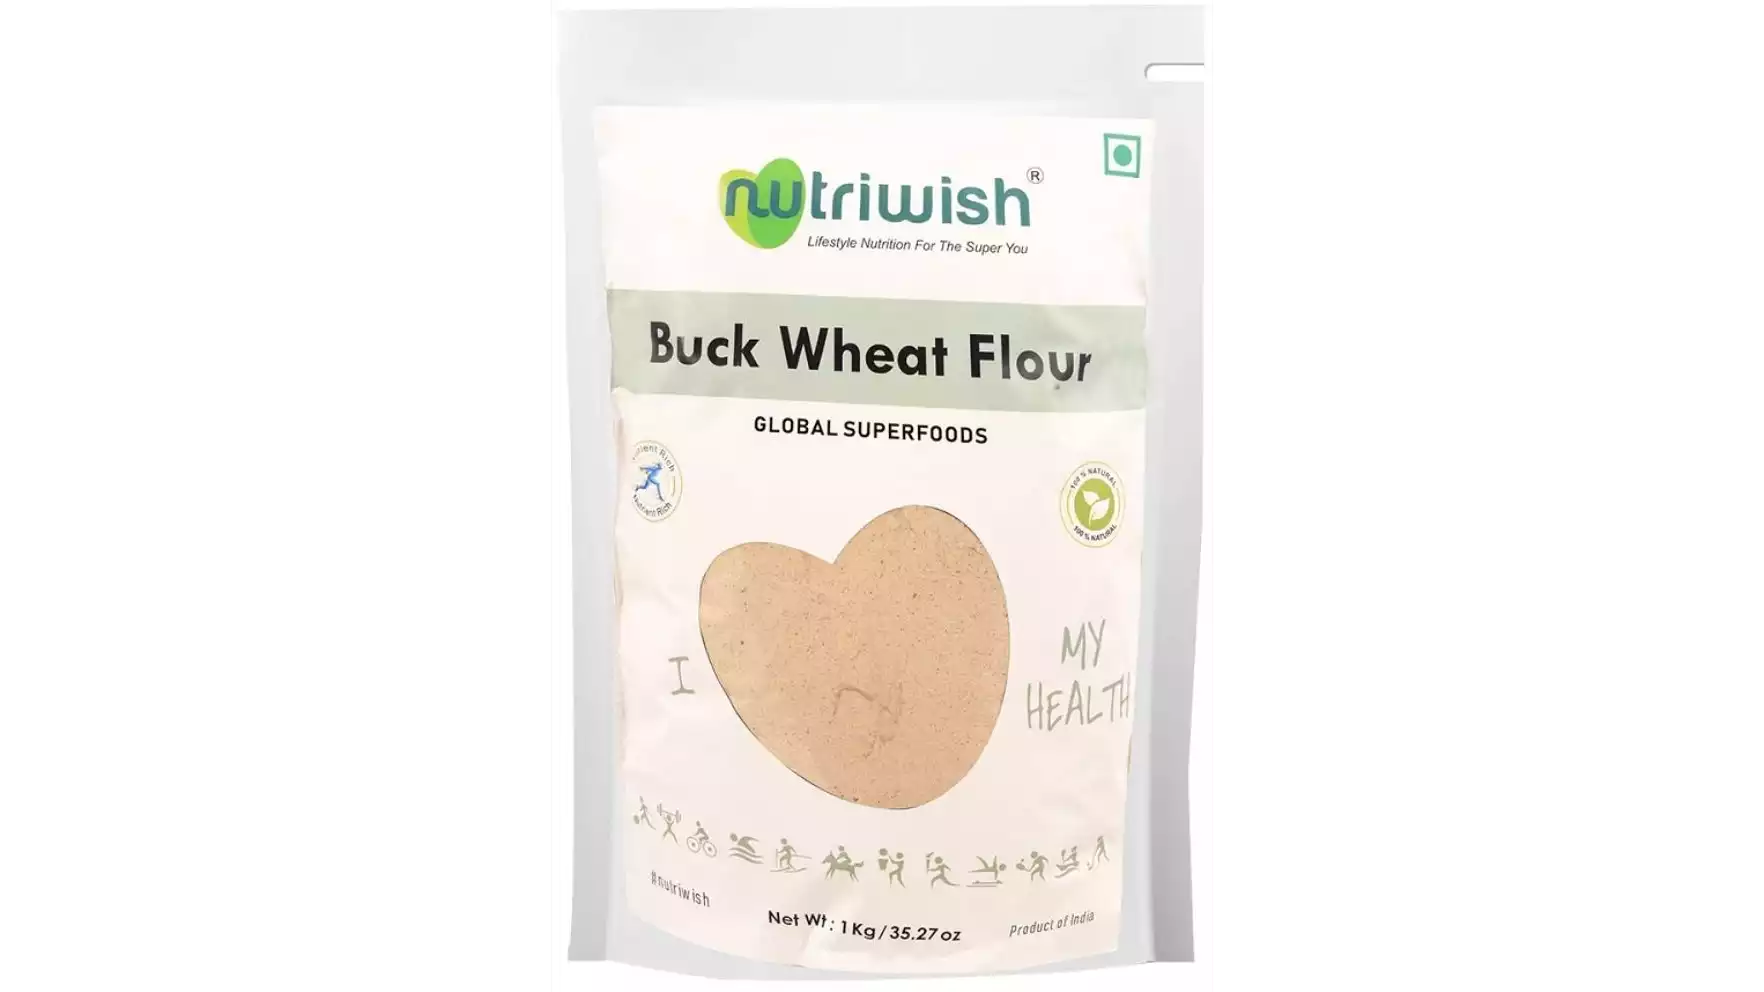 Nutriwish Buck Wheat Flour (1kg)